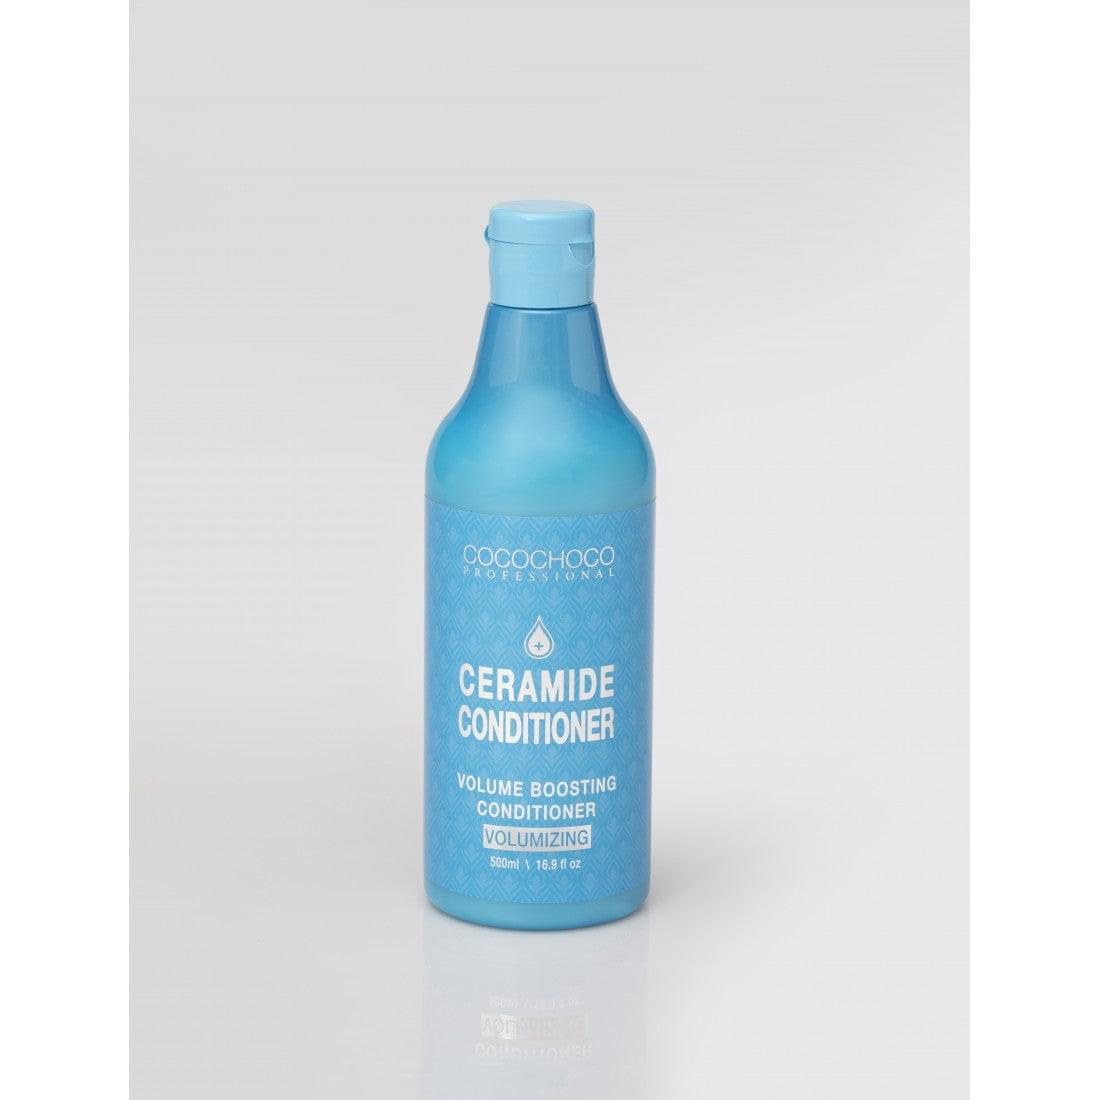 COCOCHOCO Ceramide Volume Boosting Shampoo 500ml – Revitalizing